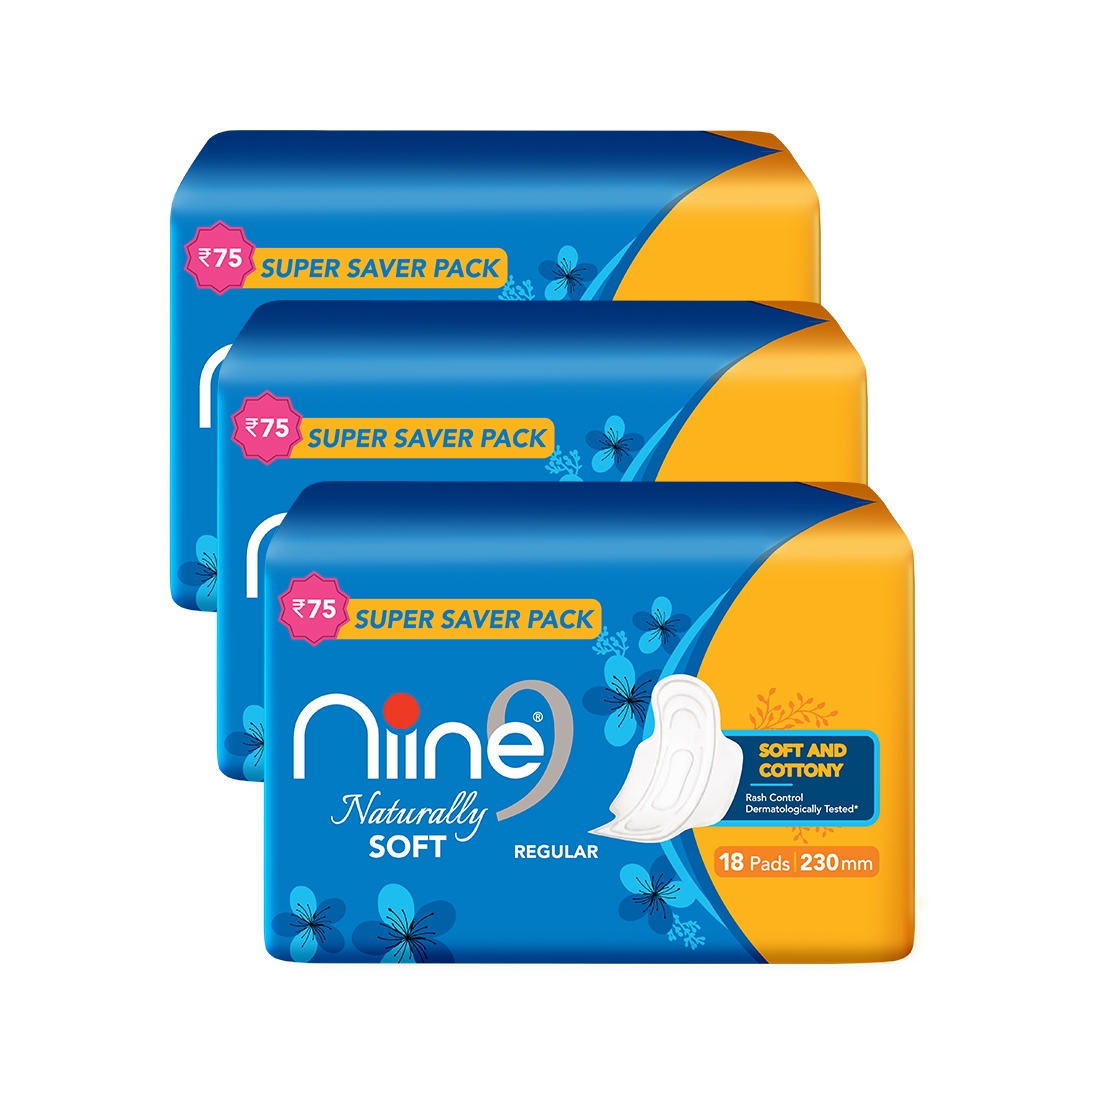 NIINE | Niine Naturally Soft Regular SUPER SAVER PACK Sanitary Napkins for Women